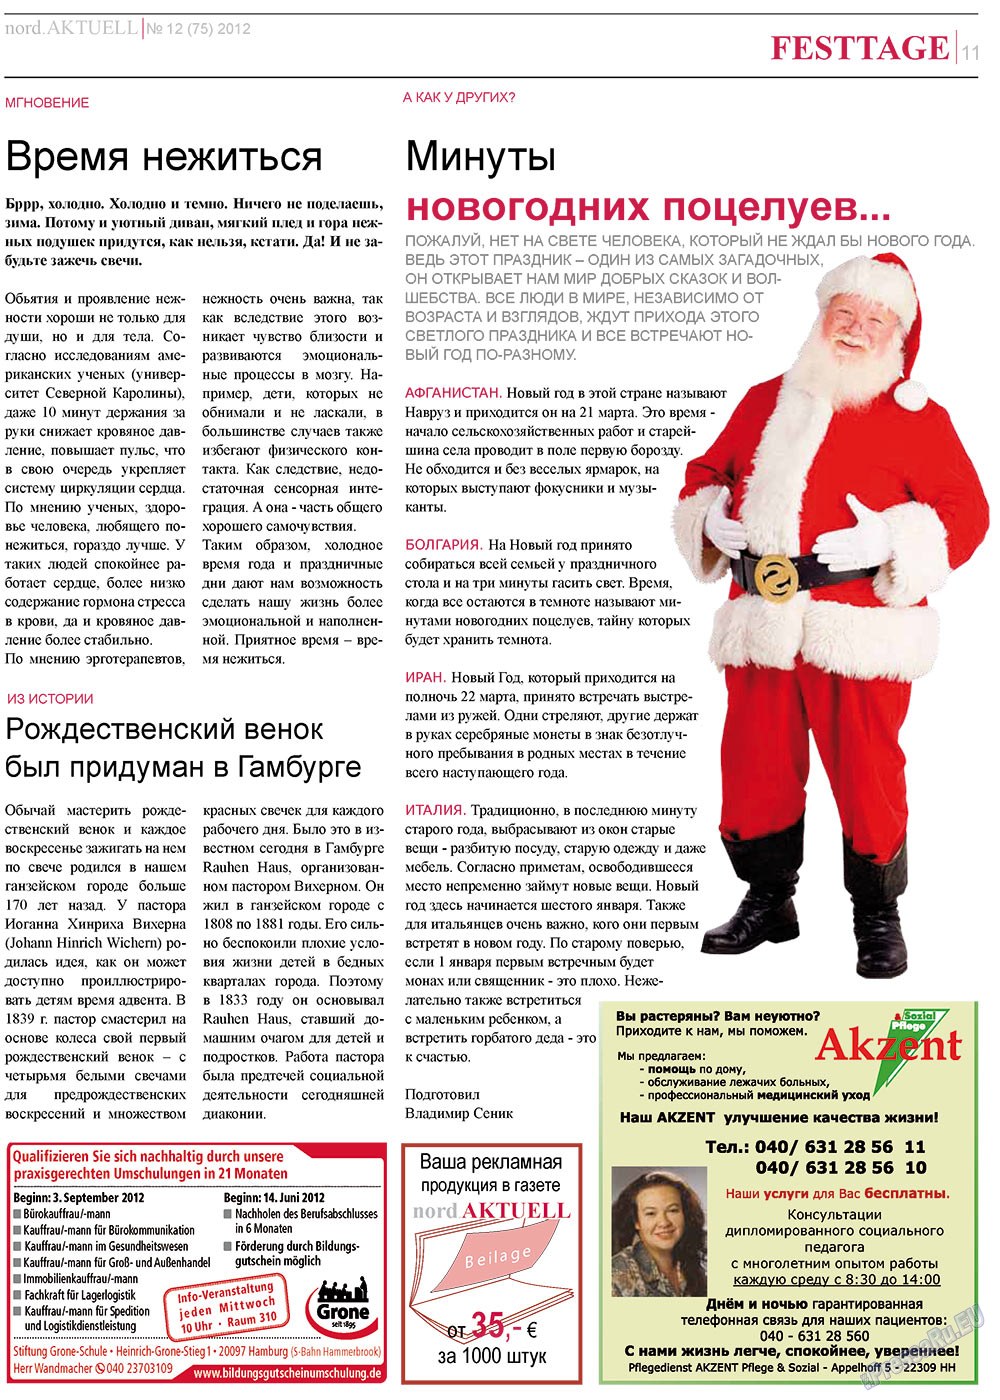 nord.Aktuell, газета. 2012 №12 стр.11